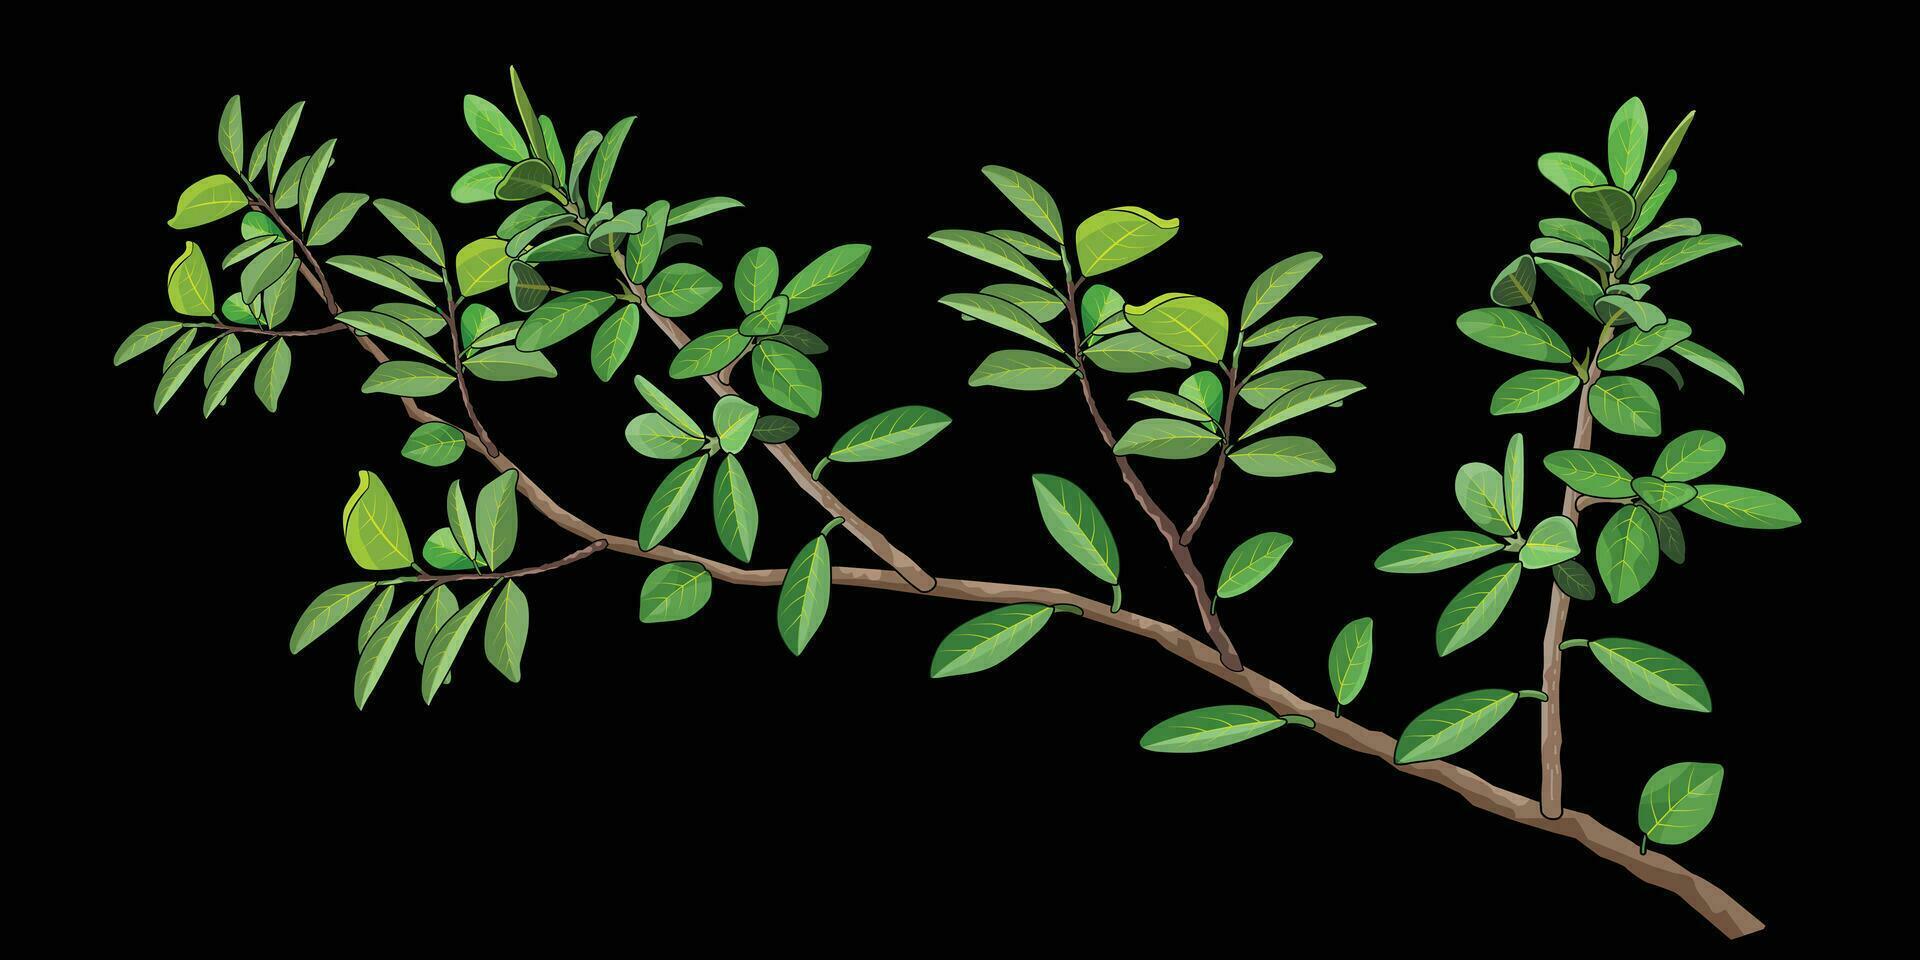 secretario árbol con verde hojas en un oscuro fondo, adecuado para folleto, folleto, folleto. vector